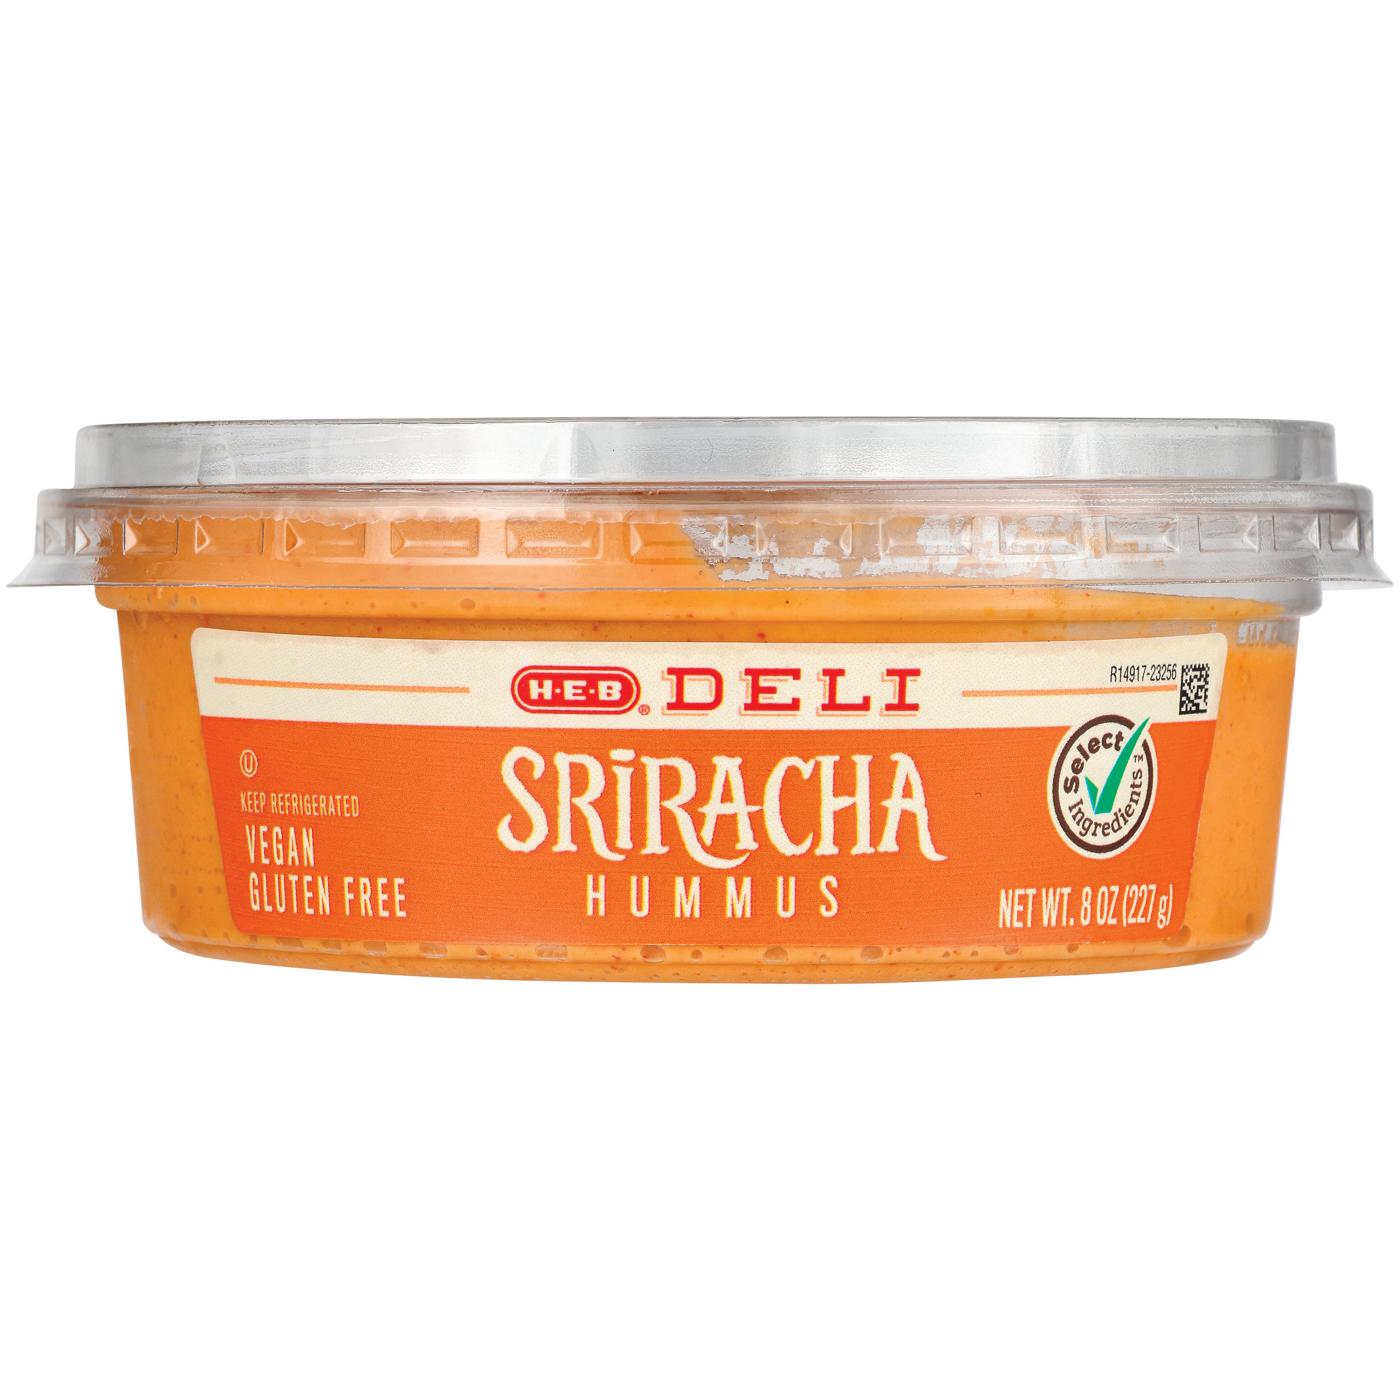 H-E-B Deli Sriracha Hummus; image 2 of 3